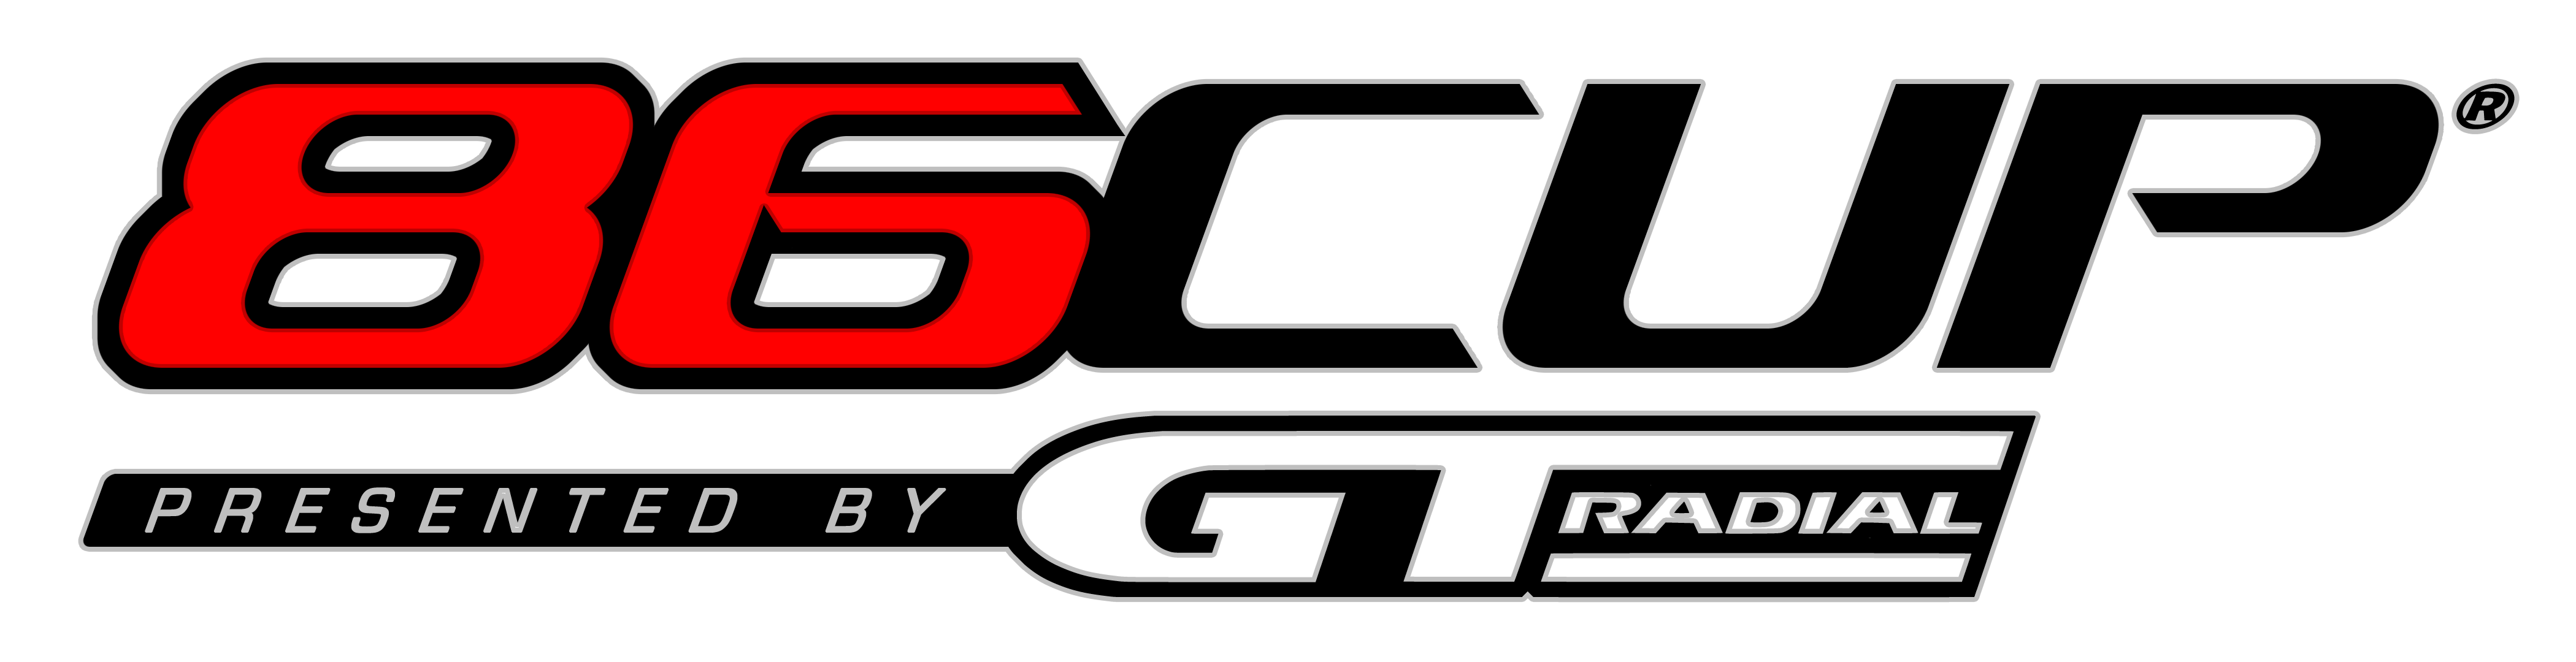 86 cup gtradial logo